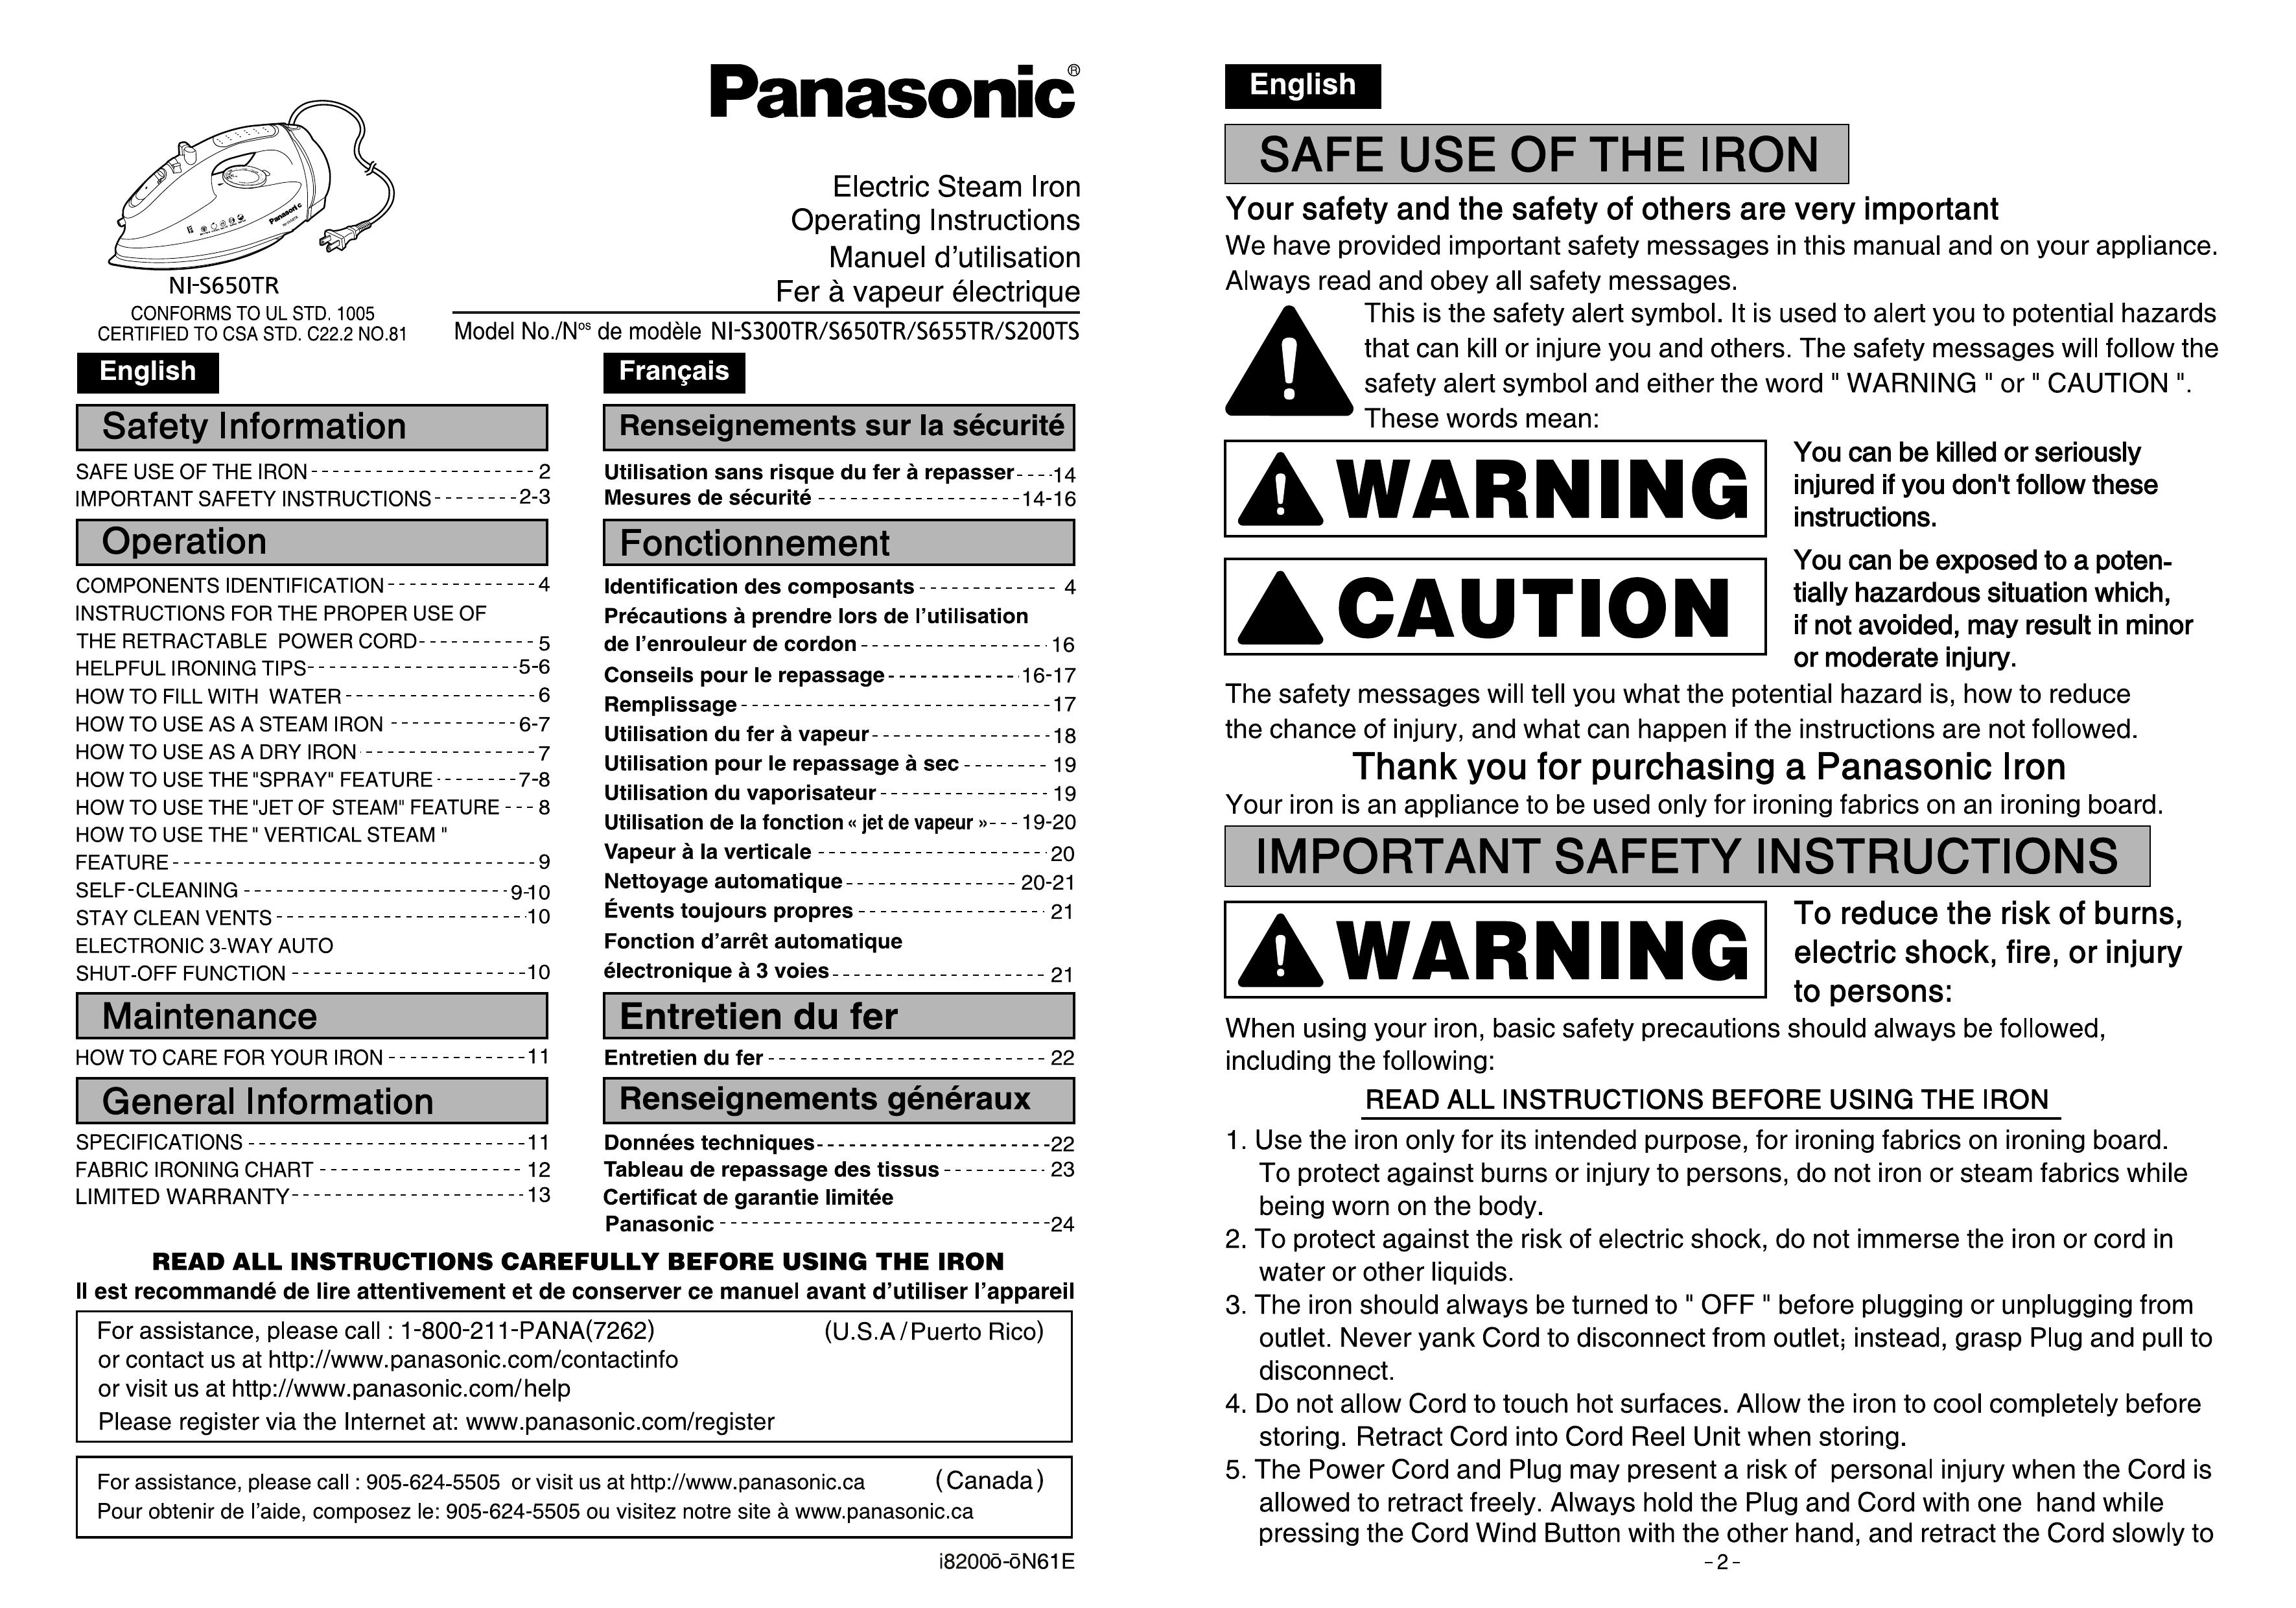 Panasonic NI-S200TS Iron User Manual